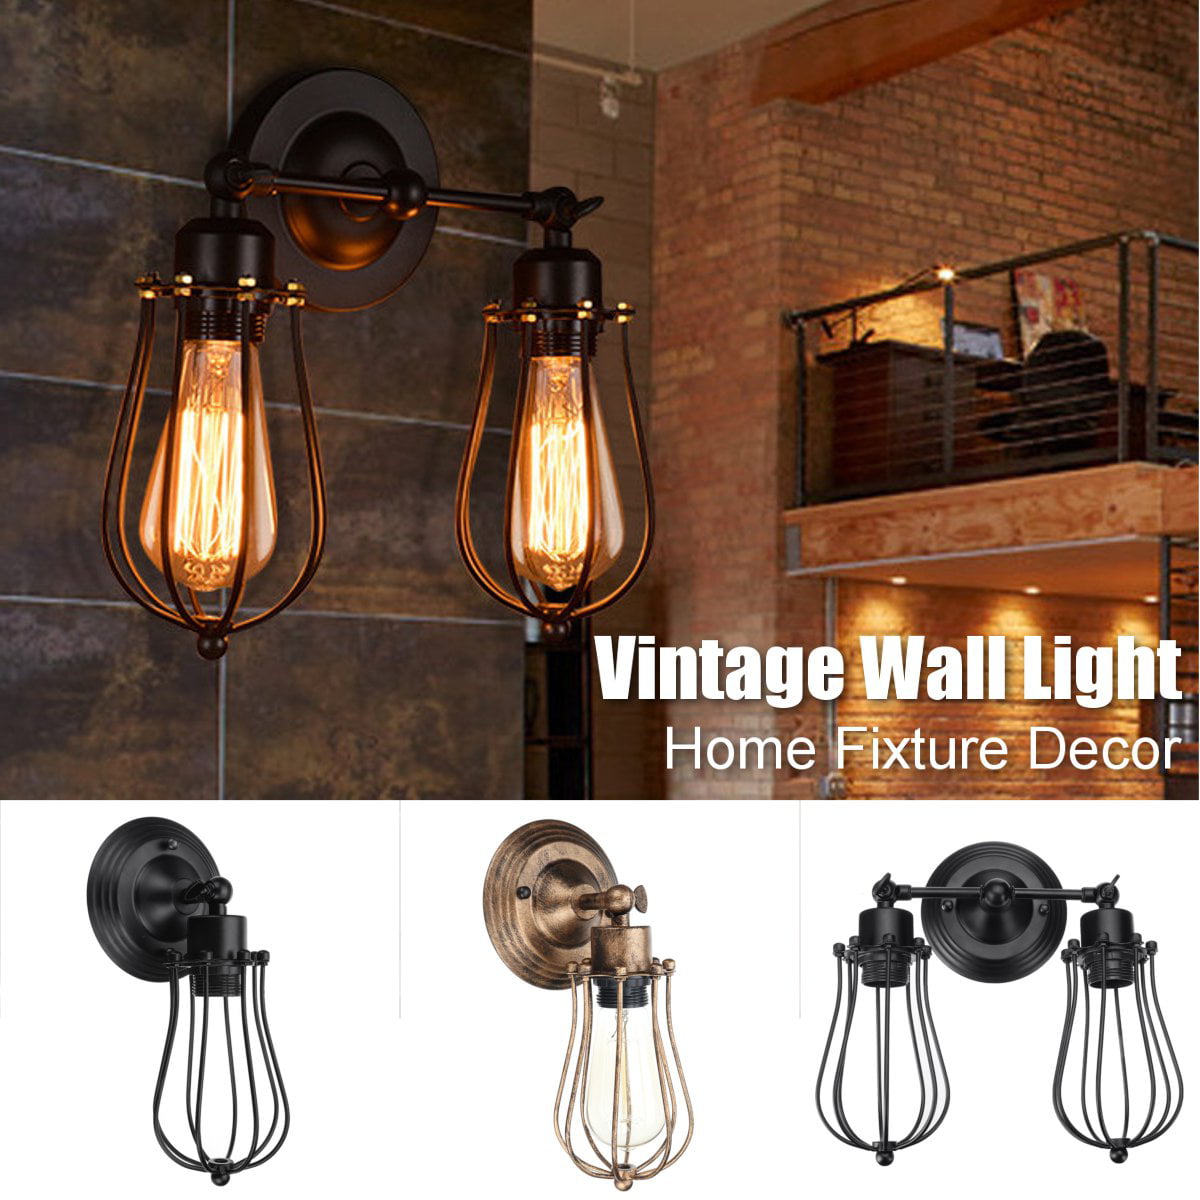 Black Metal Vintage Industrial Loft Rustic Wall Sconce Lamp Light Fixture Decor 